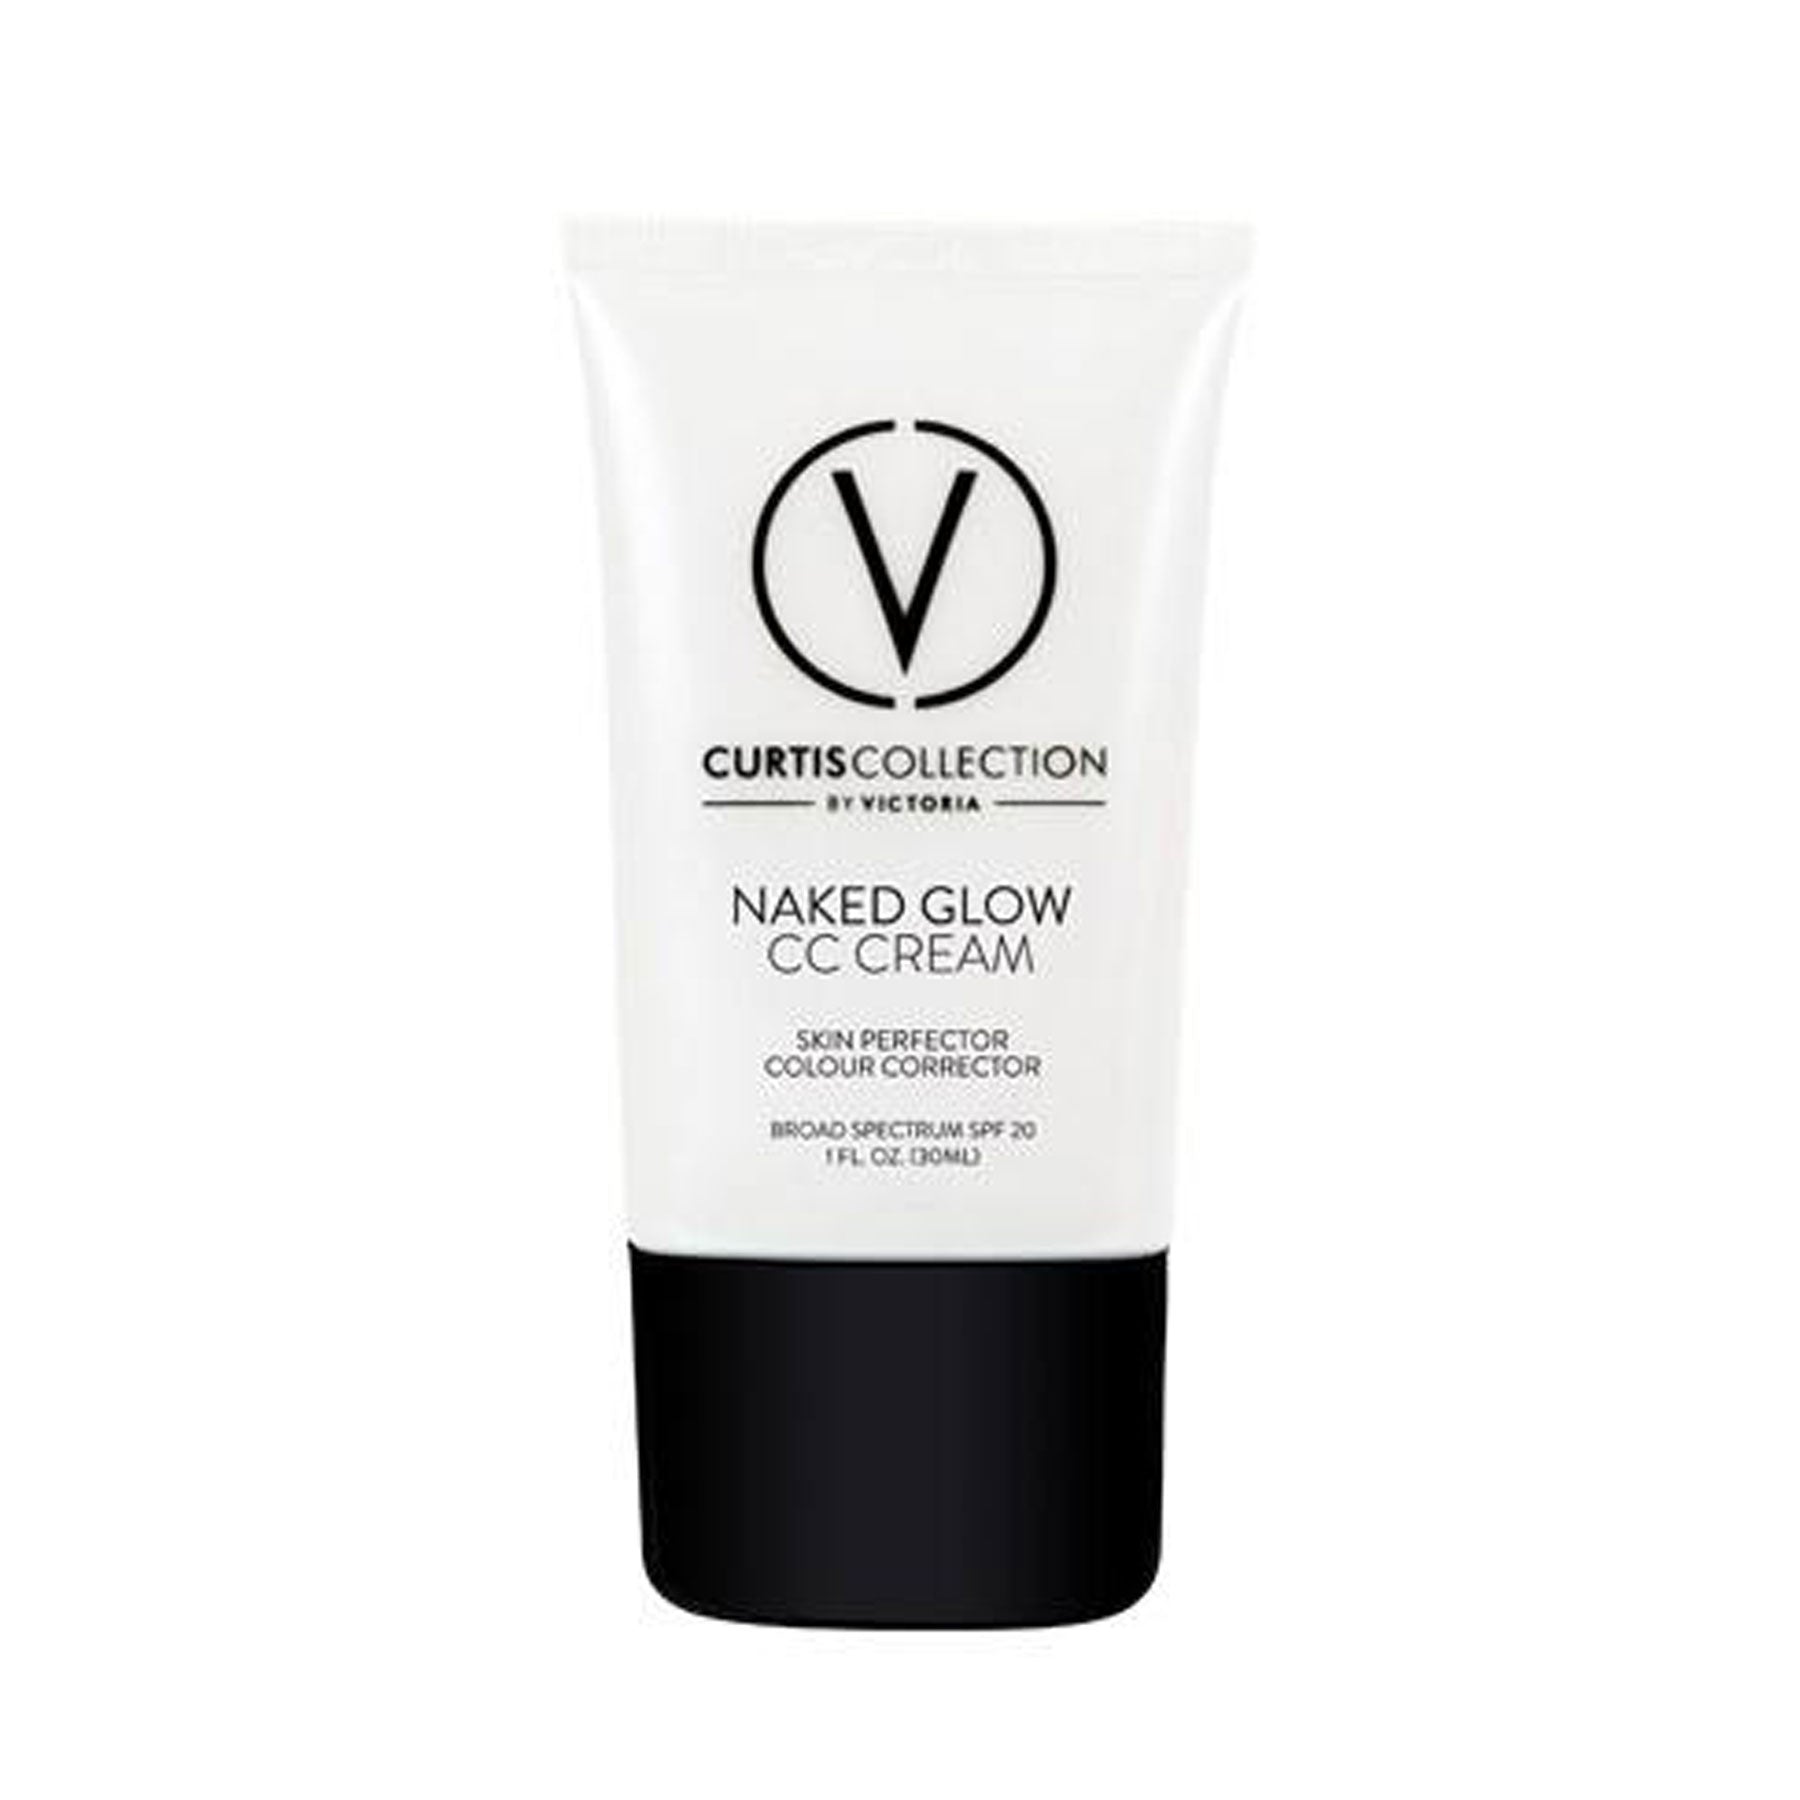 Naked Glow CC Cream